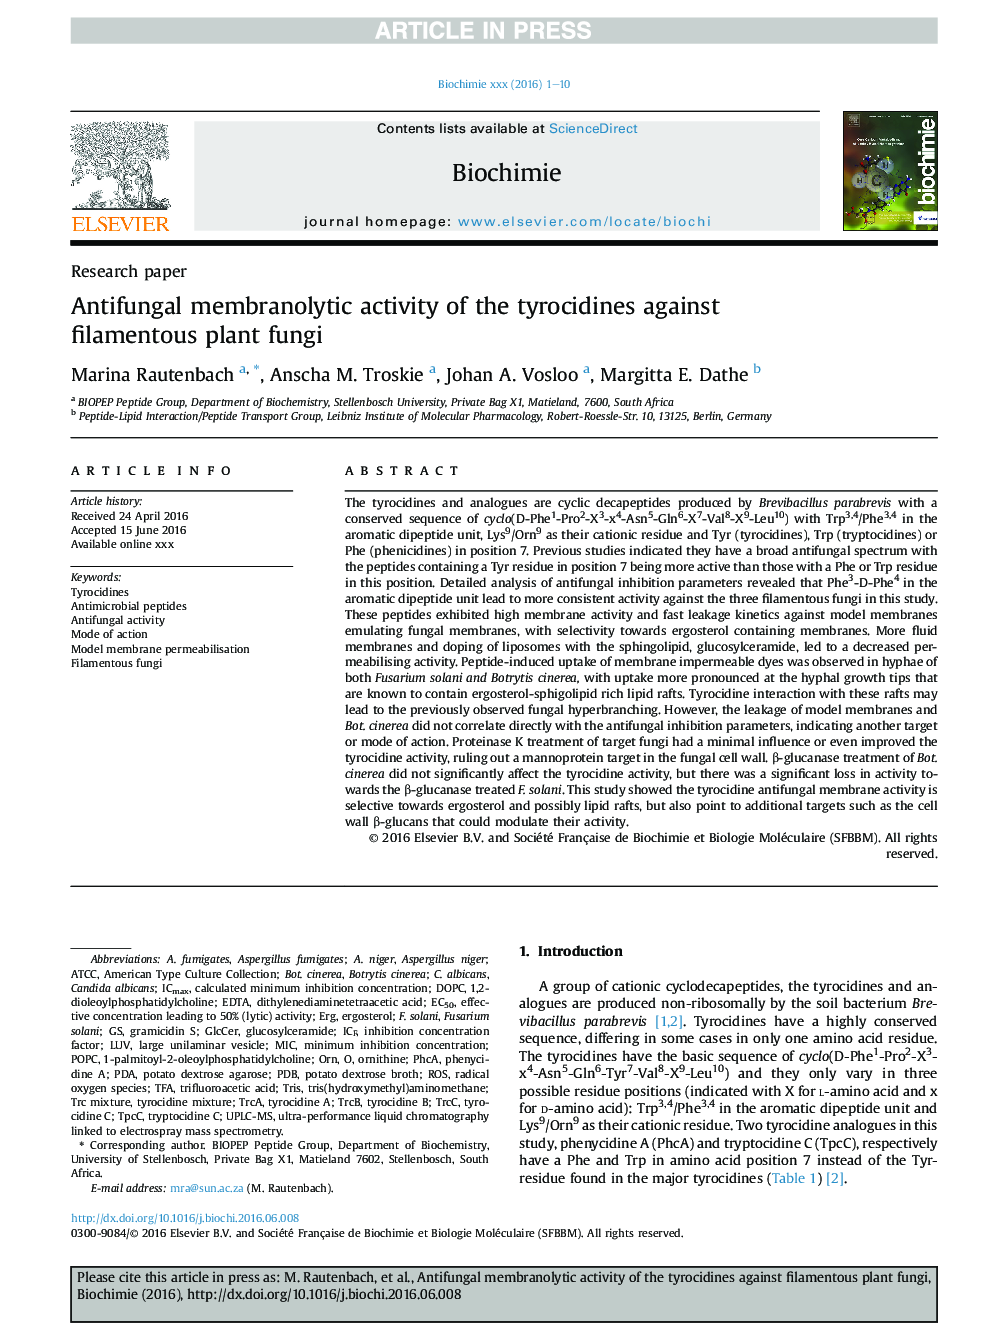 Antifungal membranolytic activity of the tyrocidines against filamentous plant fungi